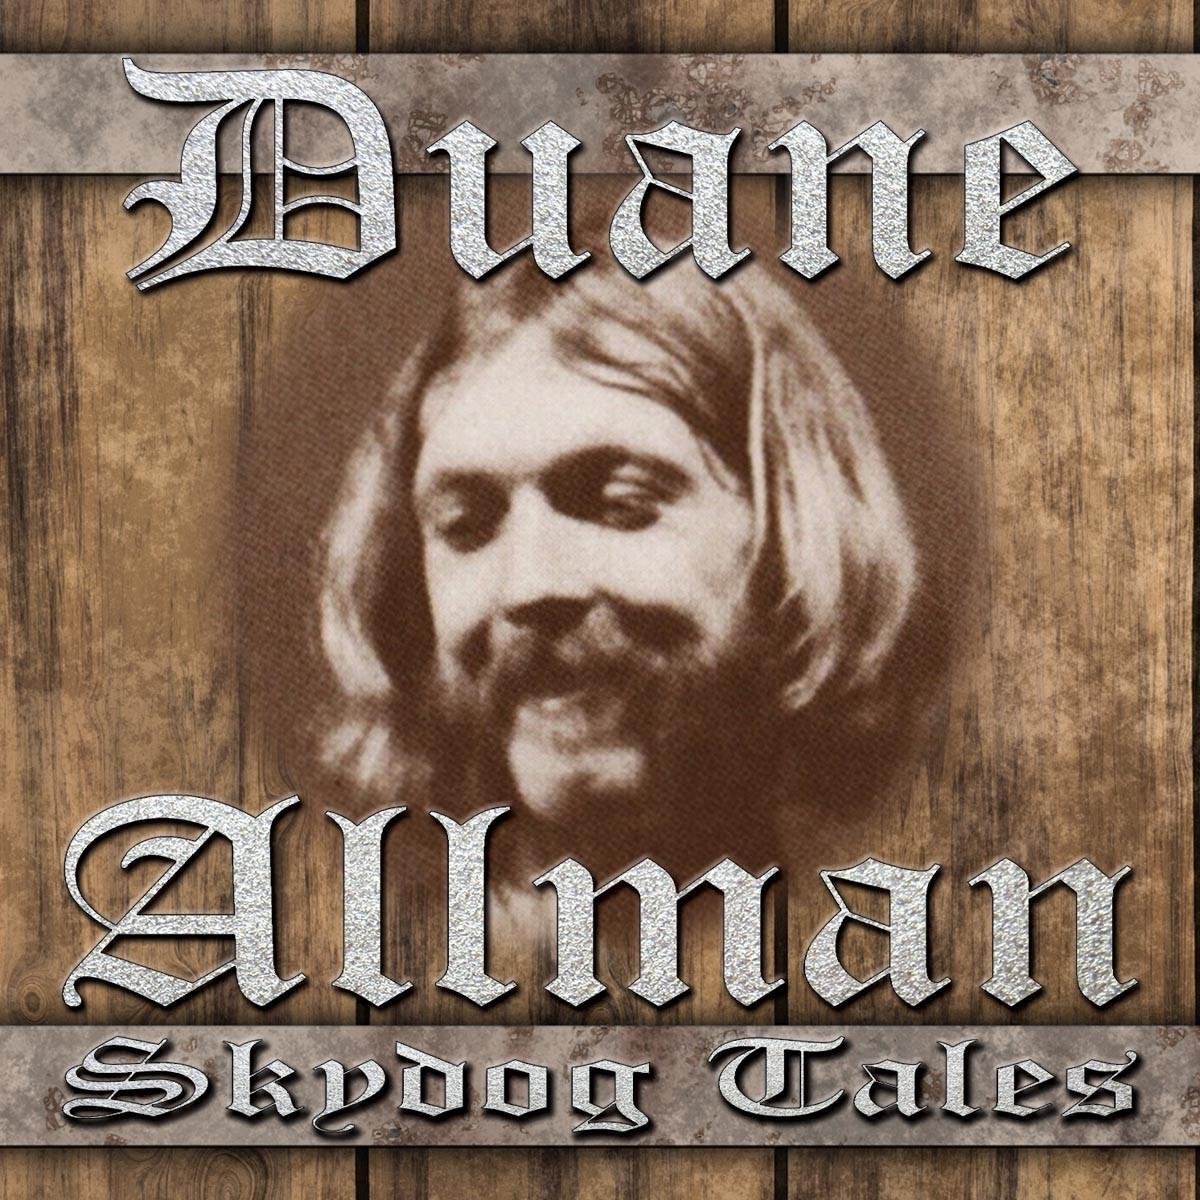 Duane Allman - Skydog Tales (CD) - Duane Allman